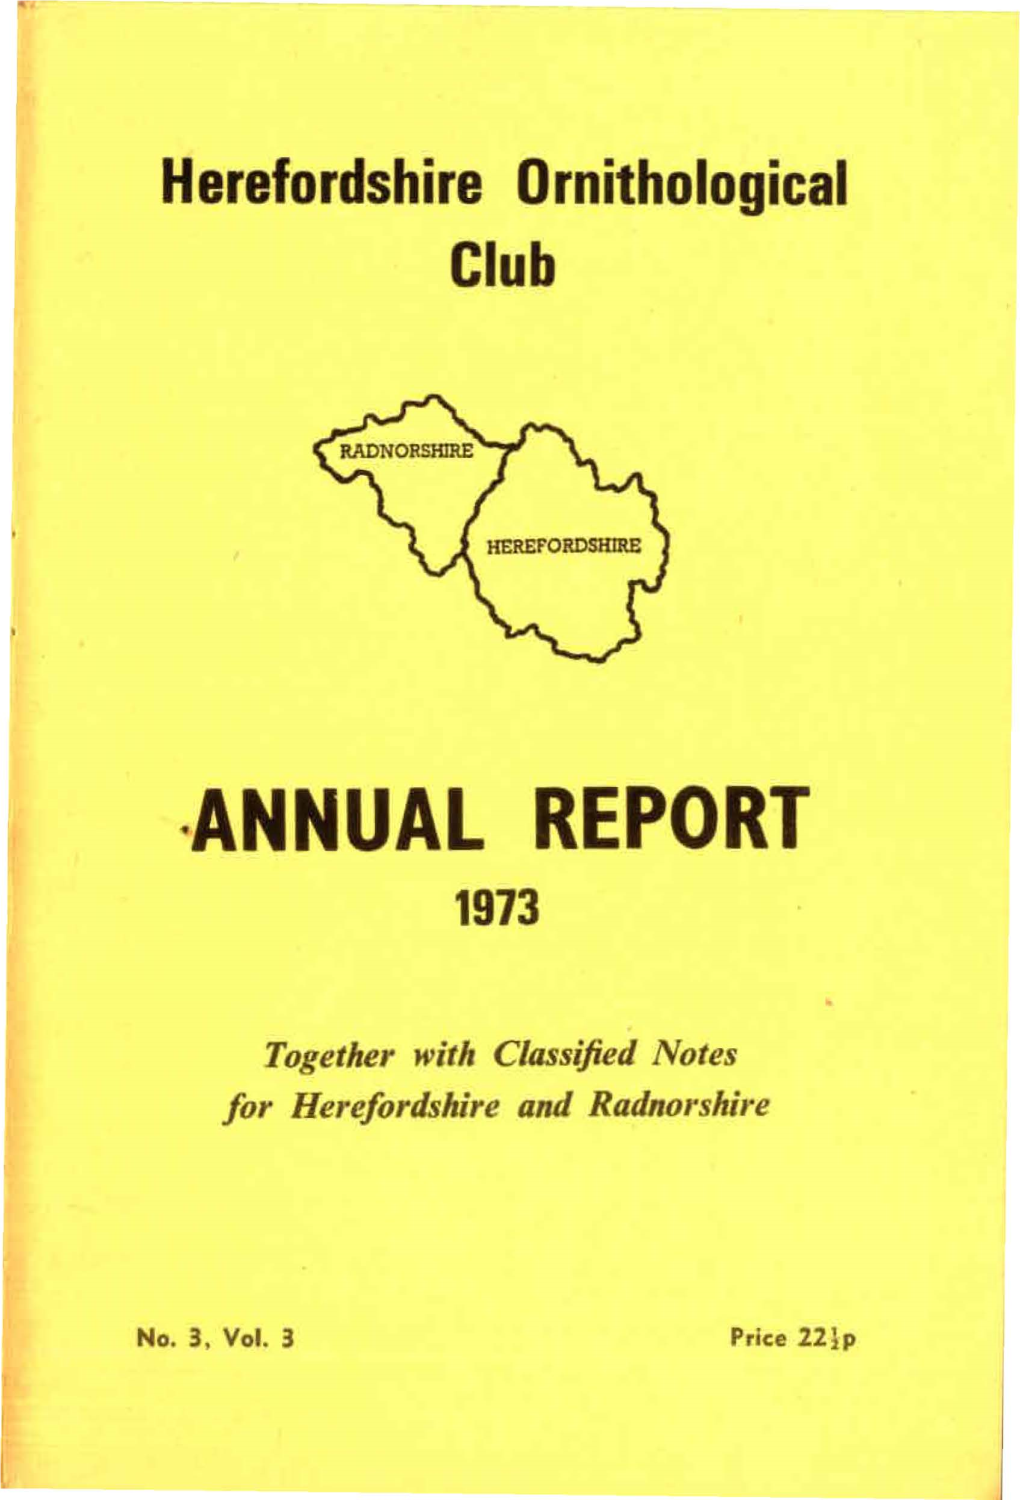 Annual Report 1973